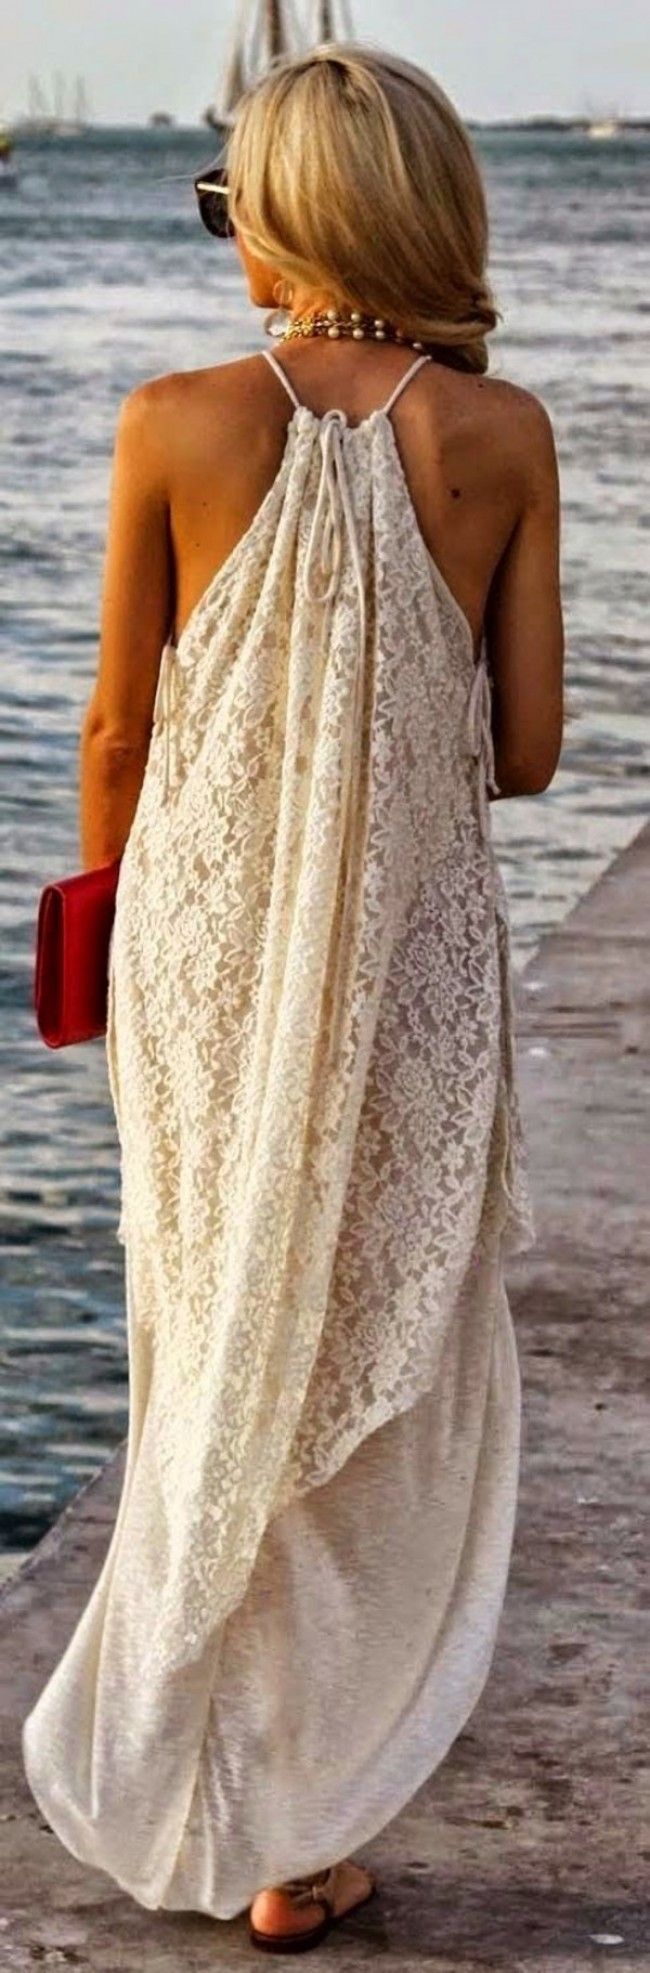 Boho lace dress